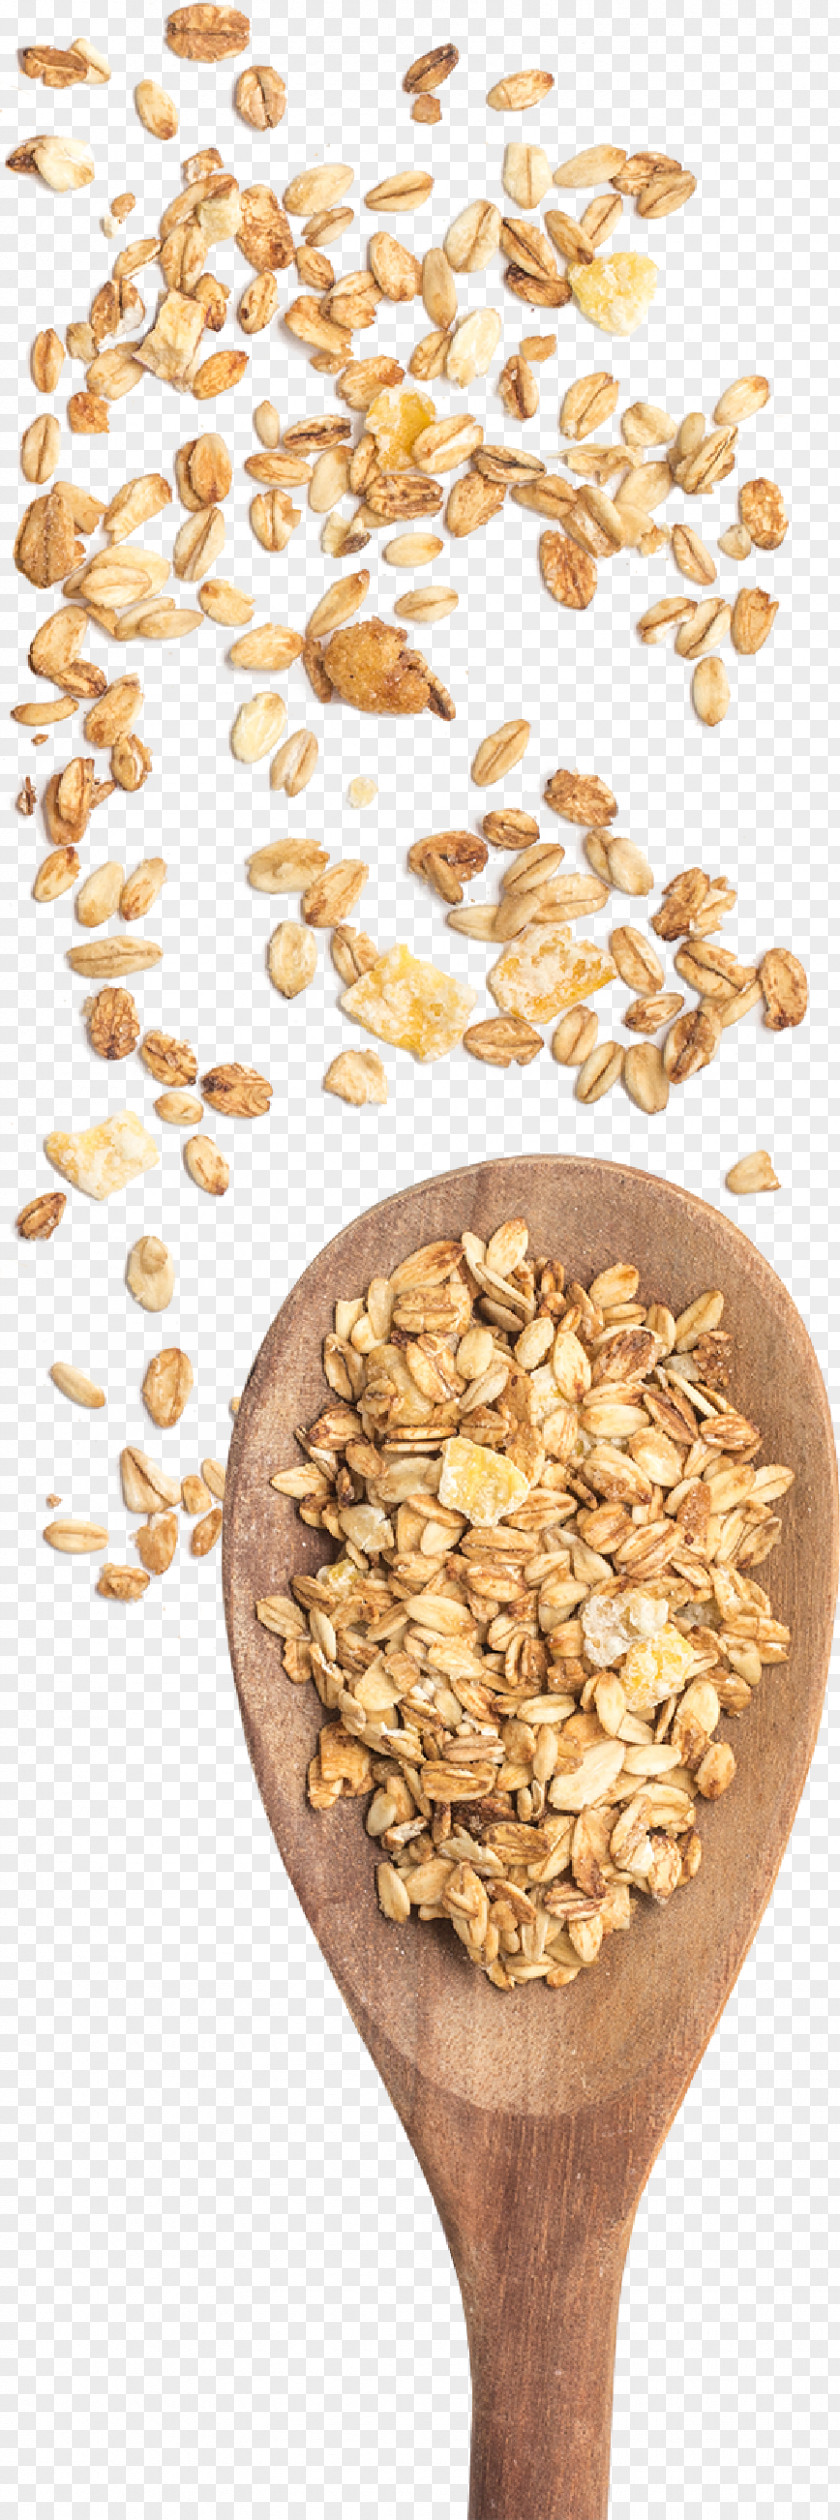 Breakfast Cereal Germ Whole Grain Oat PNG